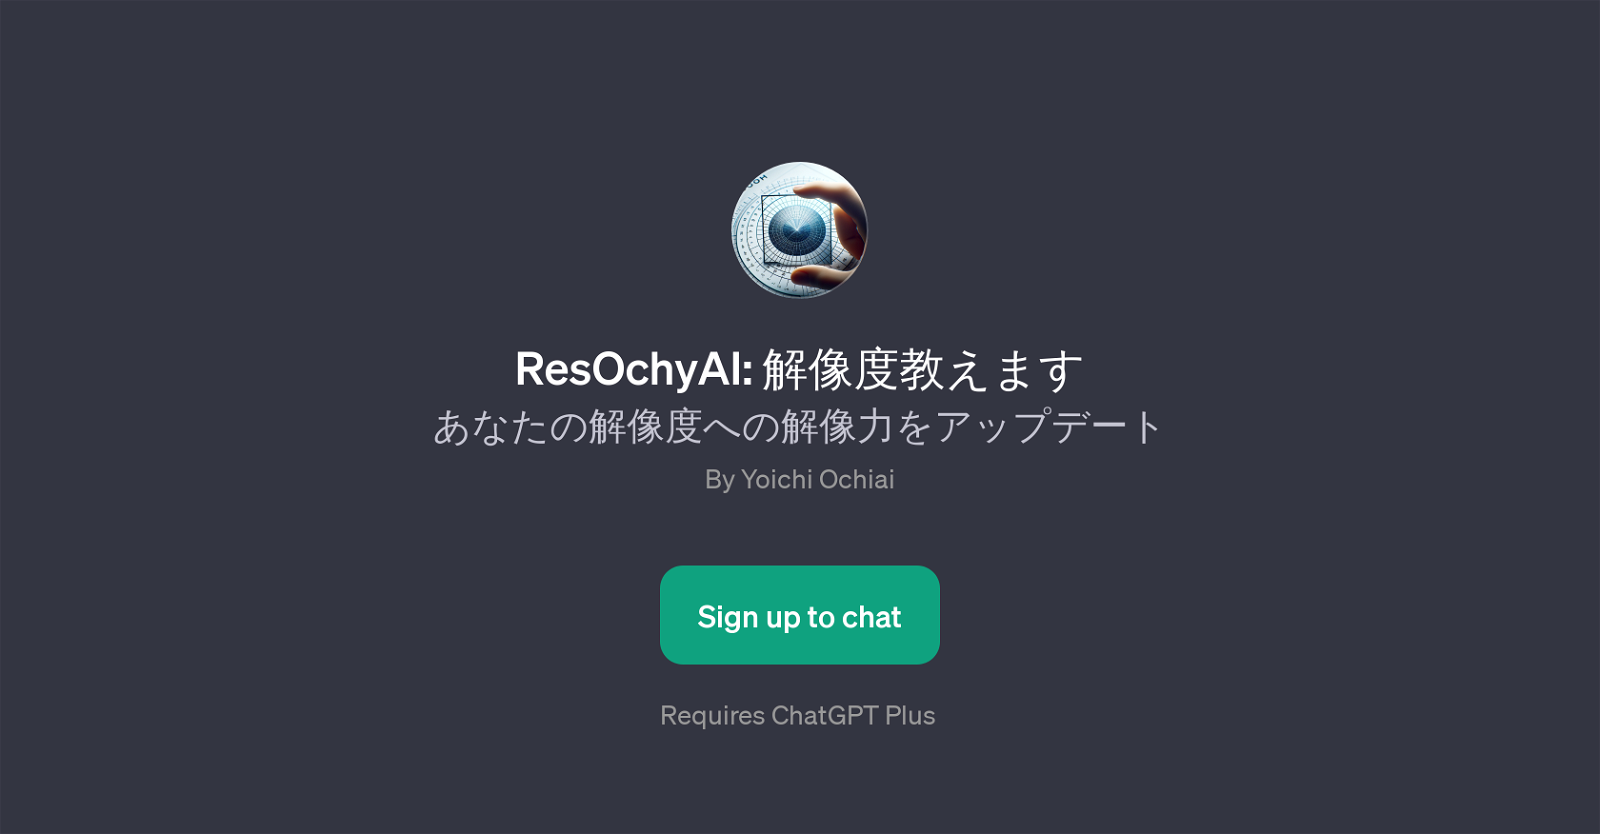 ResOchyAI website